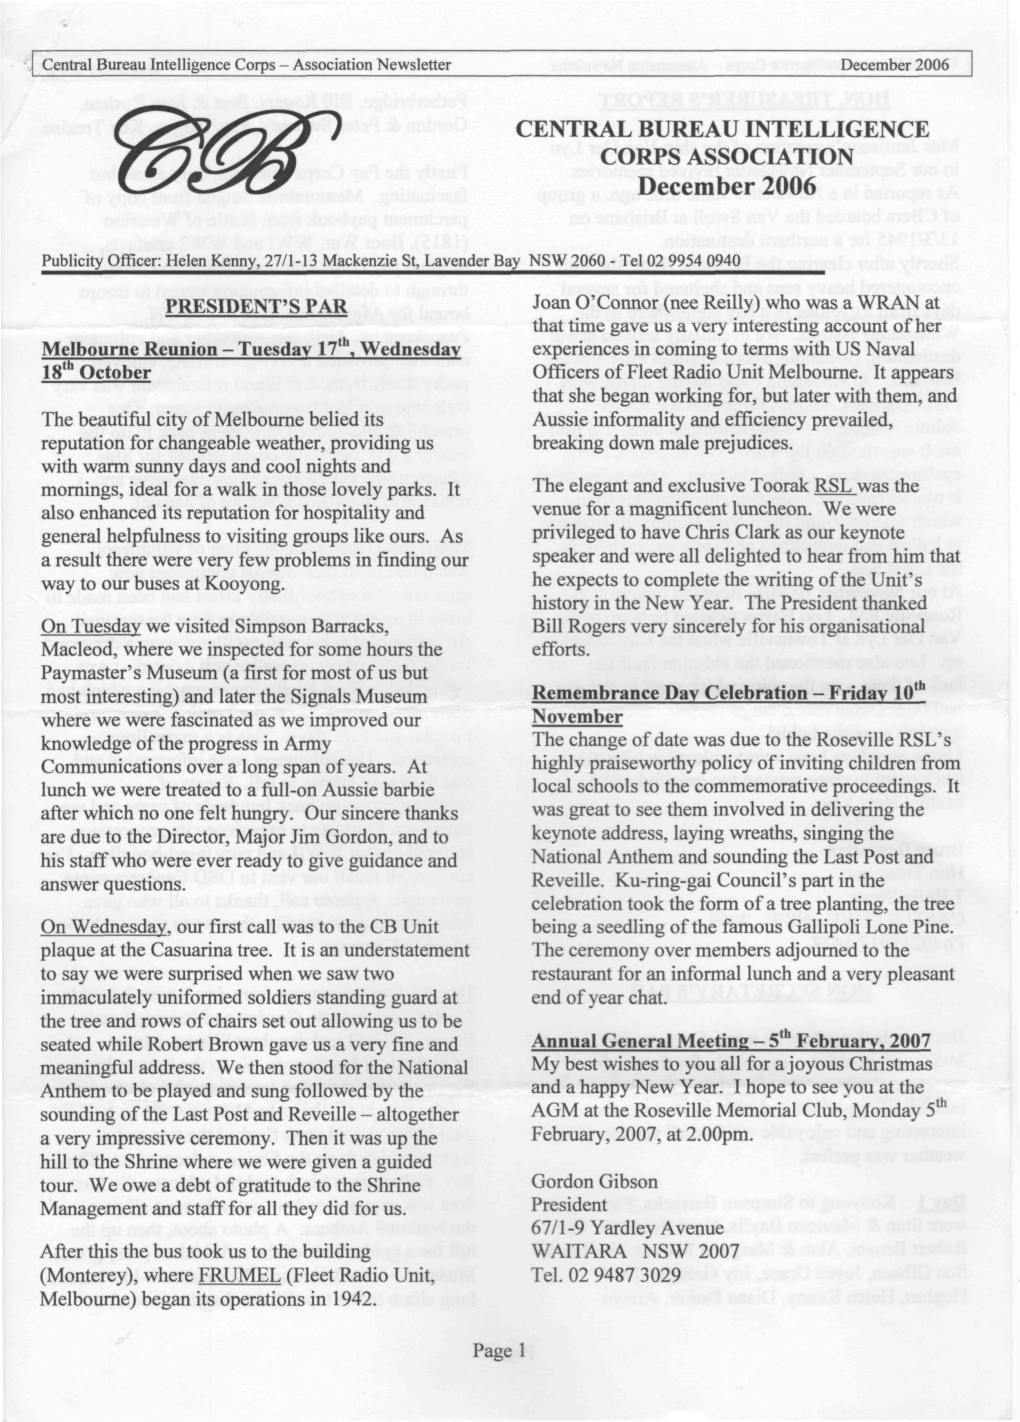 CENTRAL BUREAU INTELLIGENCE CORPS ASSOCIATION December 2006